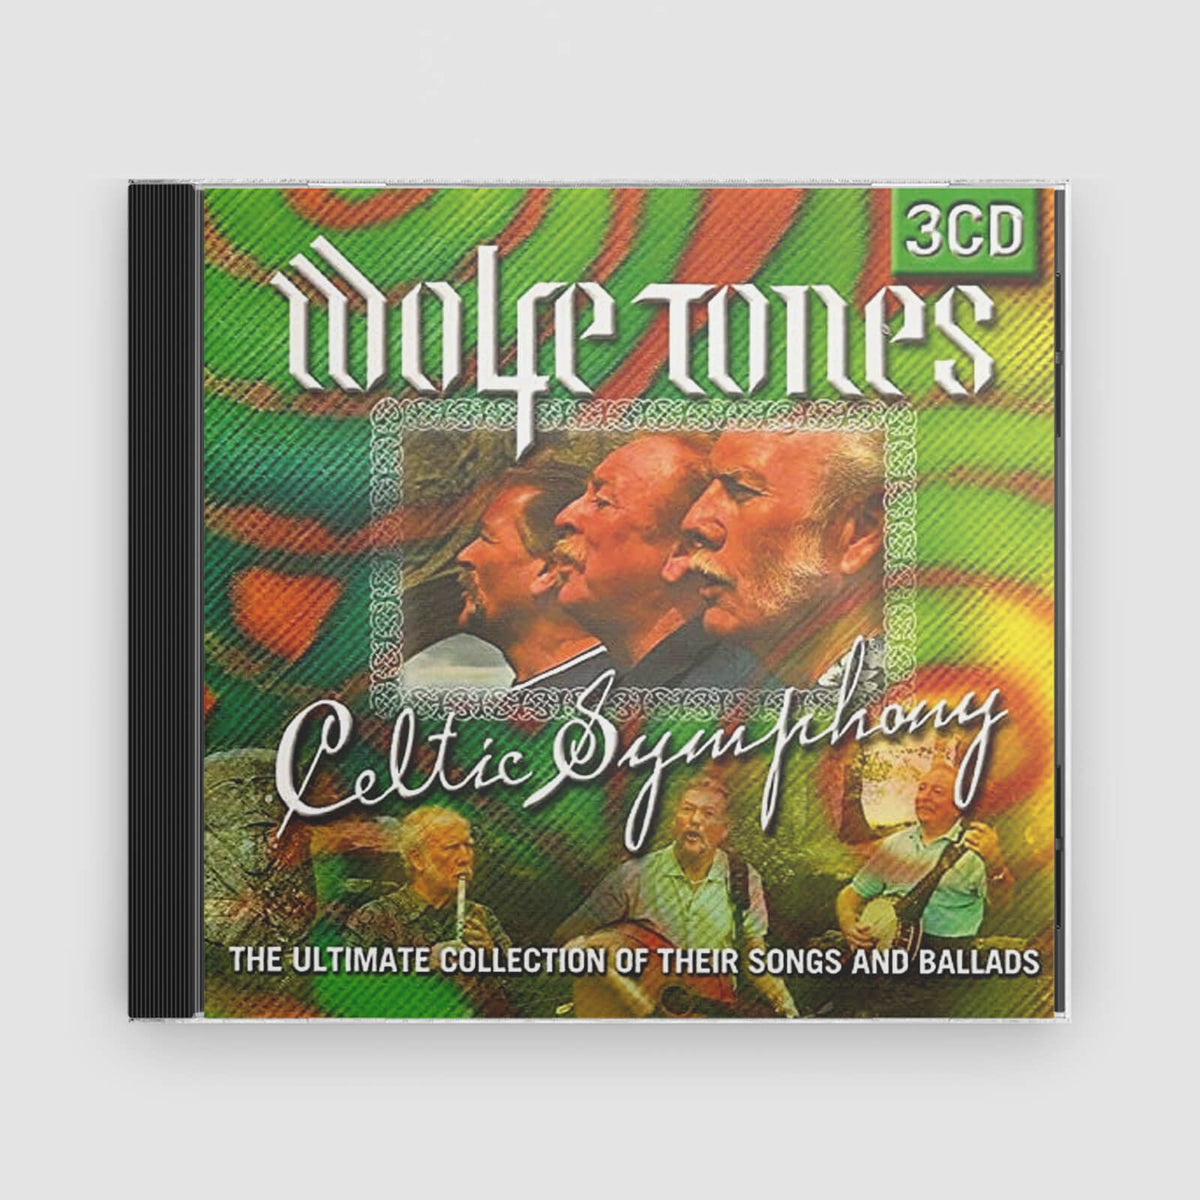 The Wolfe Tones : Celtic Symphony (3CD)